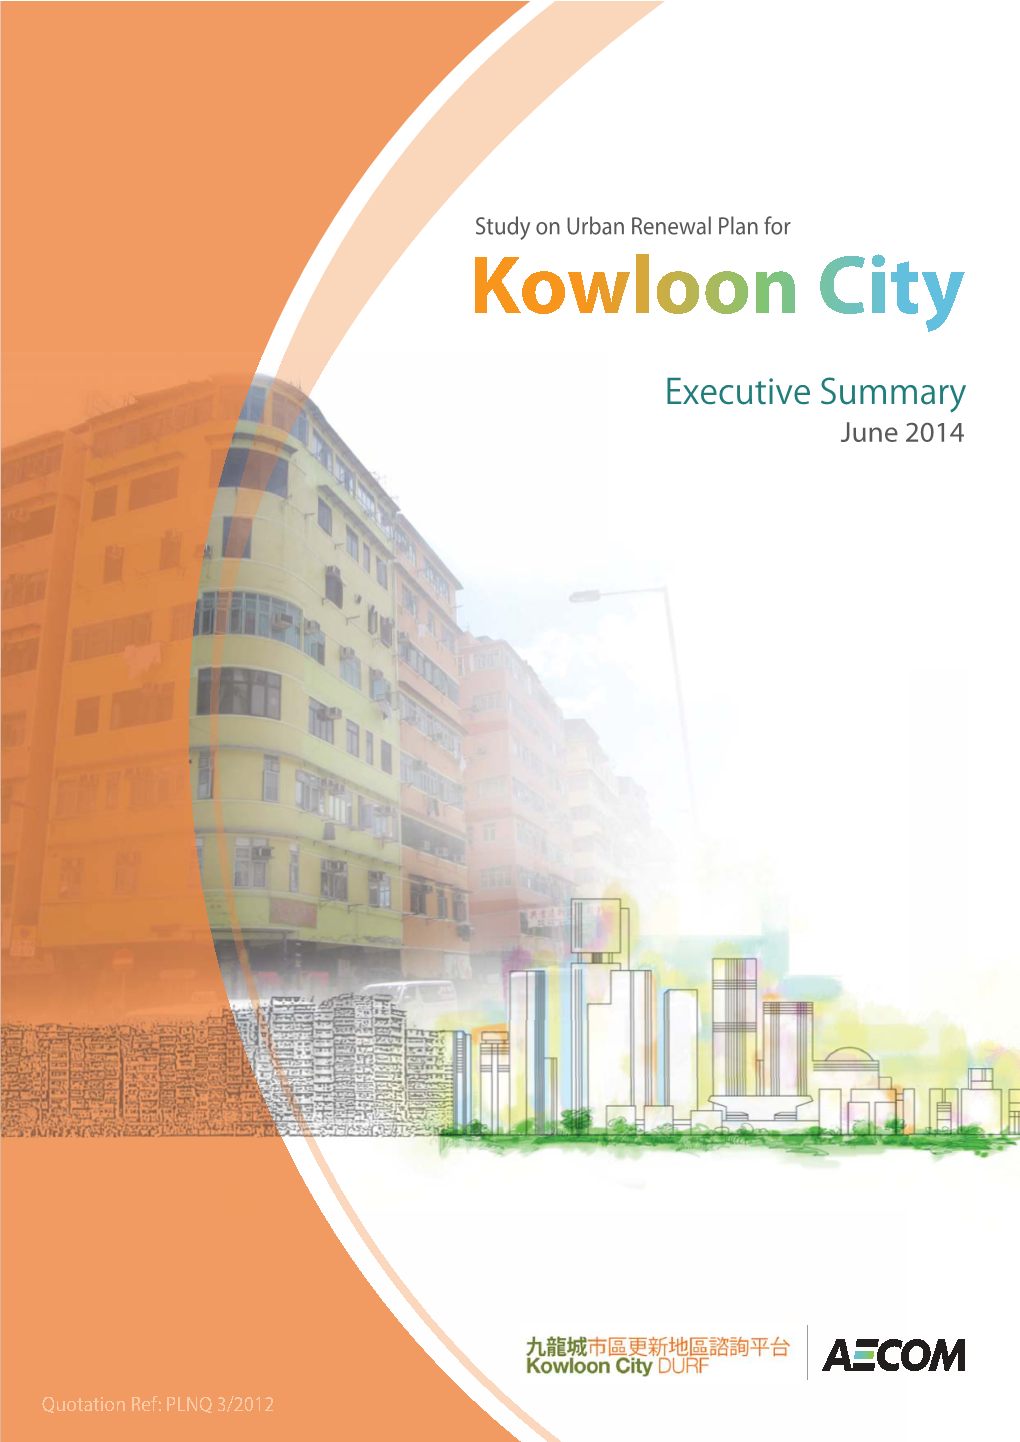 Executive Summary June 2014 Study on Urban Renewal Plan for Kowloon City Executive Summary